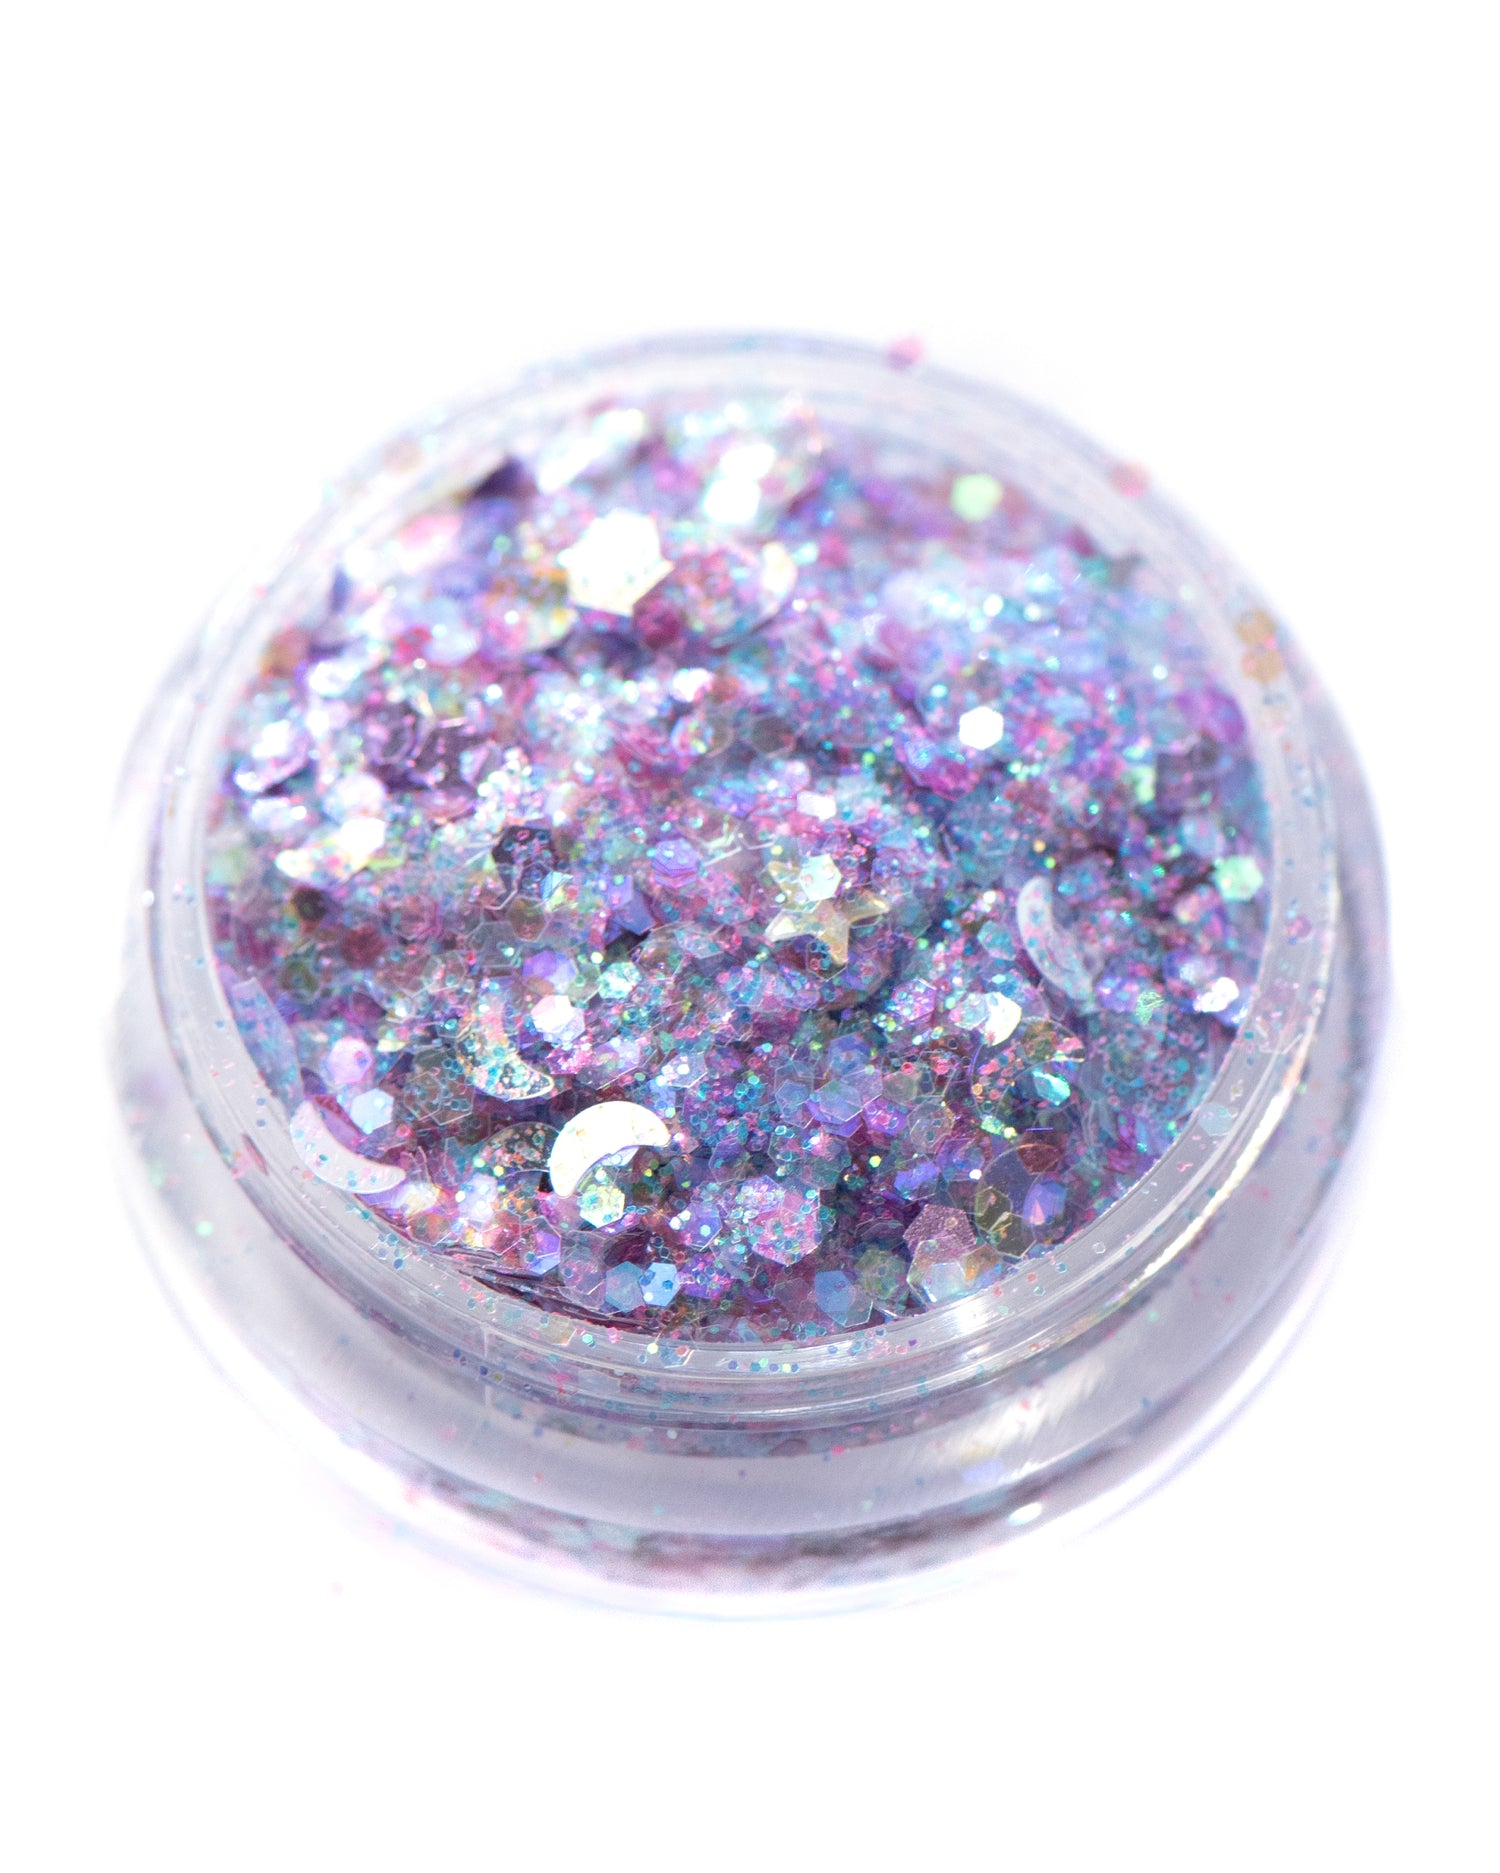 Twilight - Light Purple Chunky Glitter with Moons and Stars - Lunautics Chunky Glitter